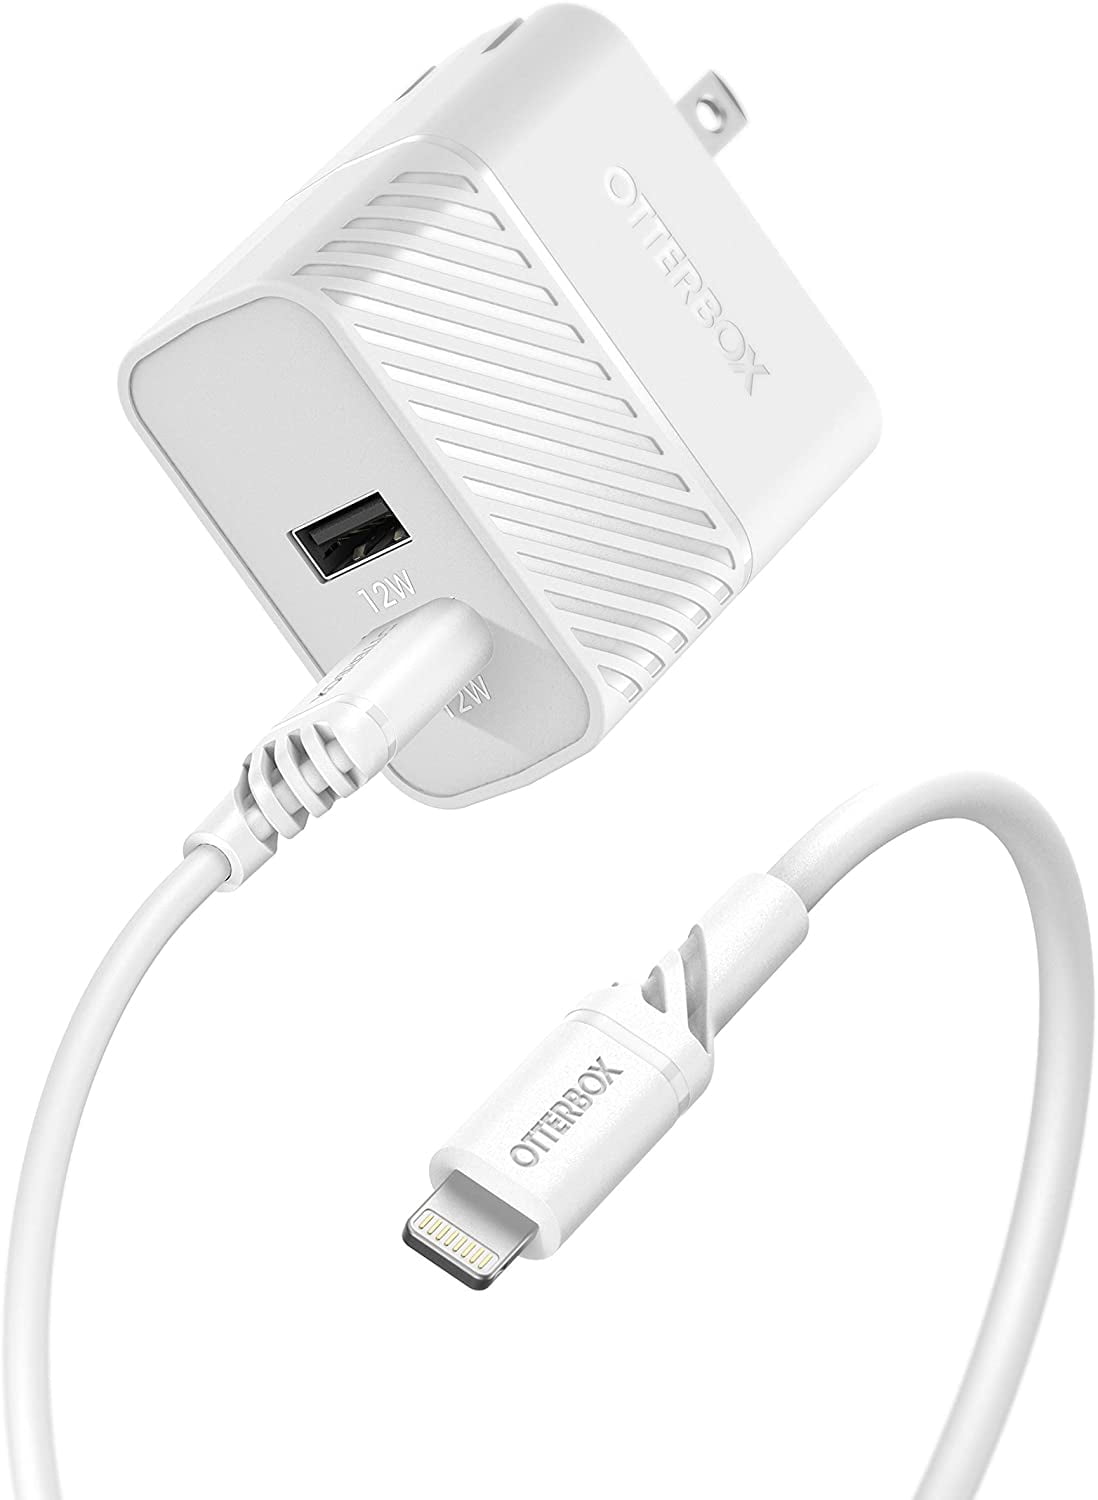 Portable USB Cable for iPad Mini 3 Cable by BoxWave Apple iPad Mini 3 Jet Black - AllCharge miniSync Retractable Cable for iPad Mini 3